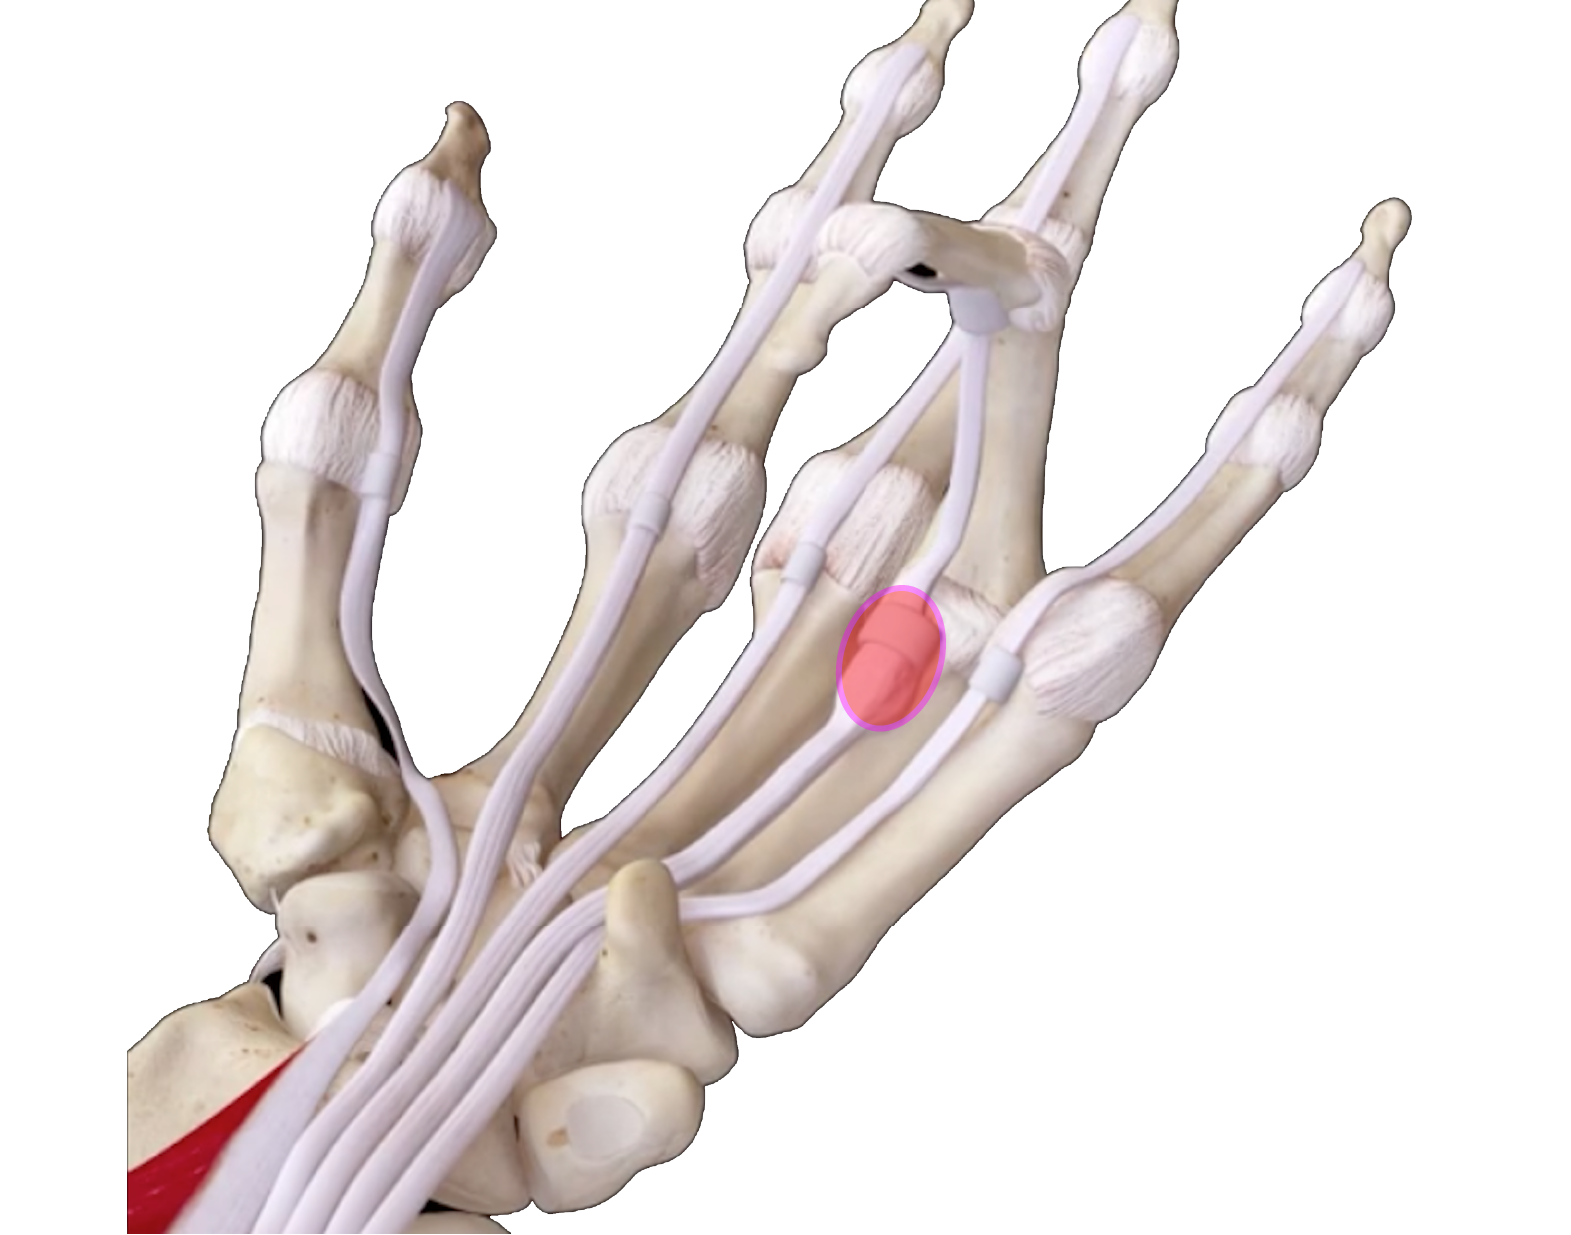 Trigger Finger anatomy